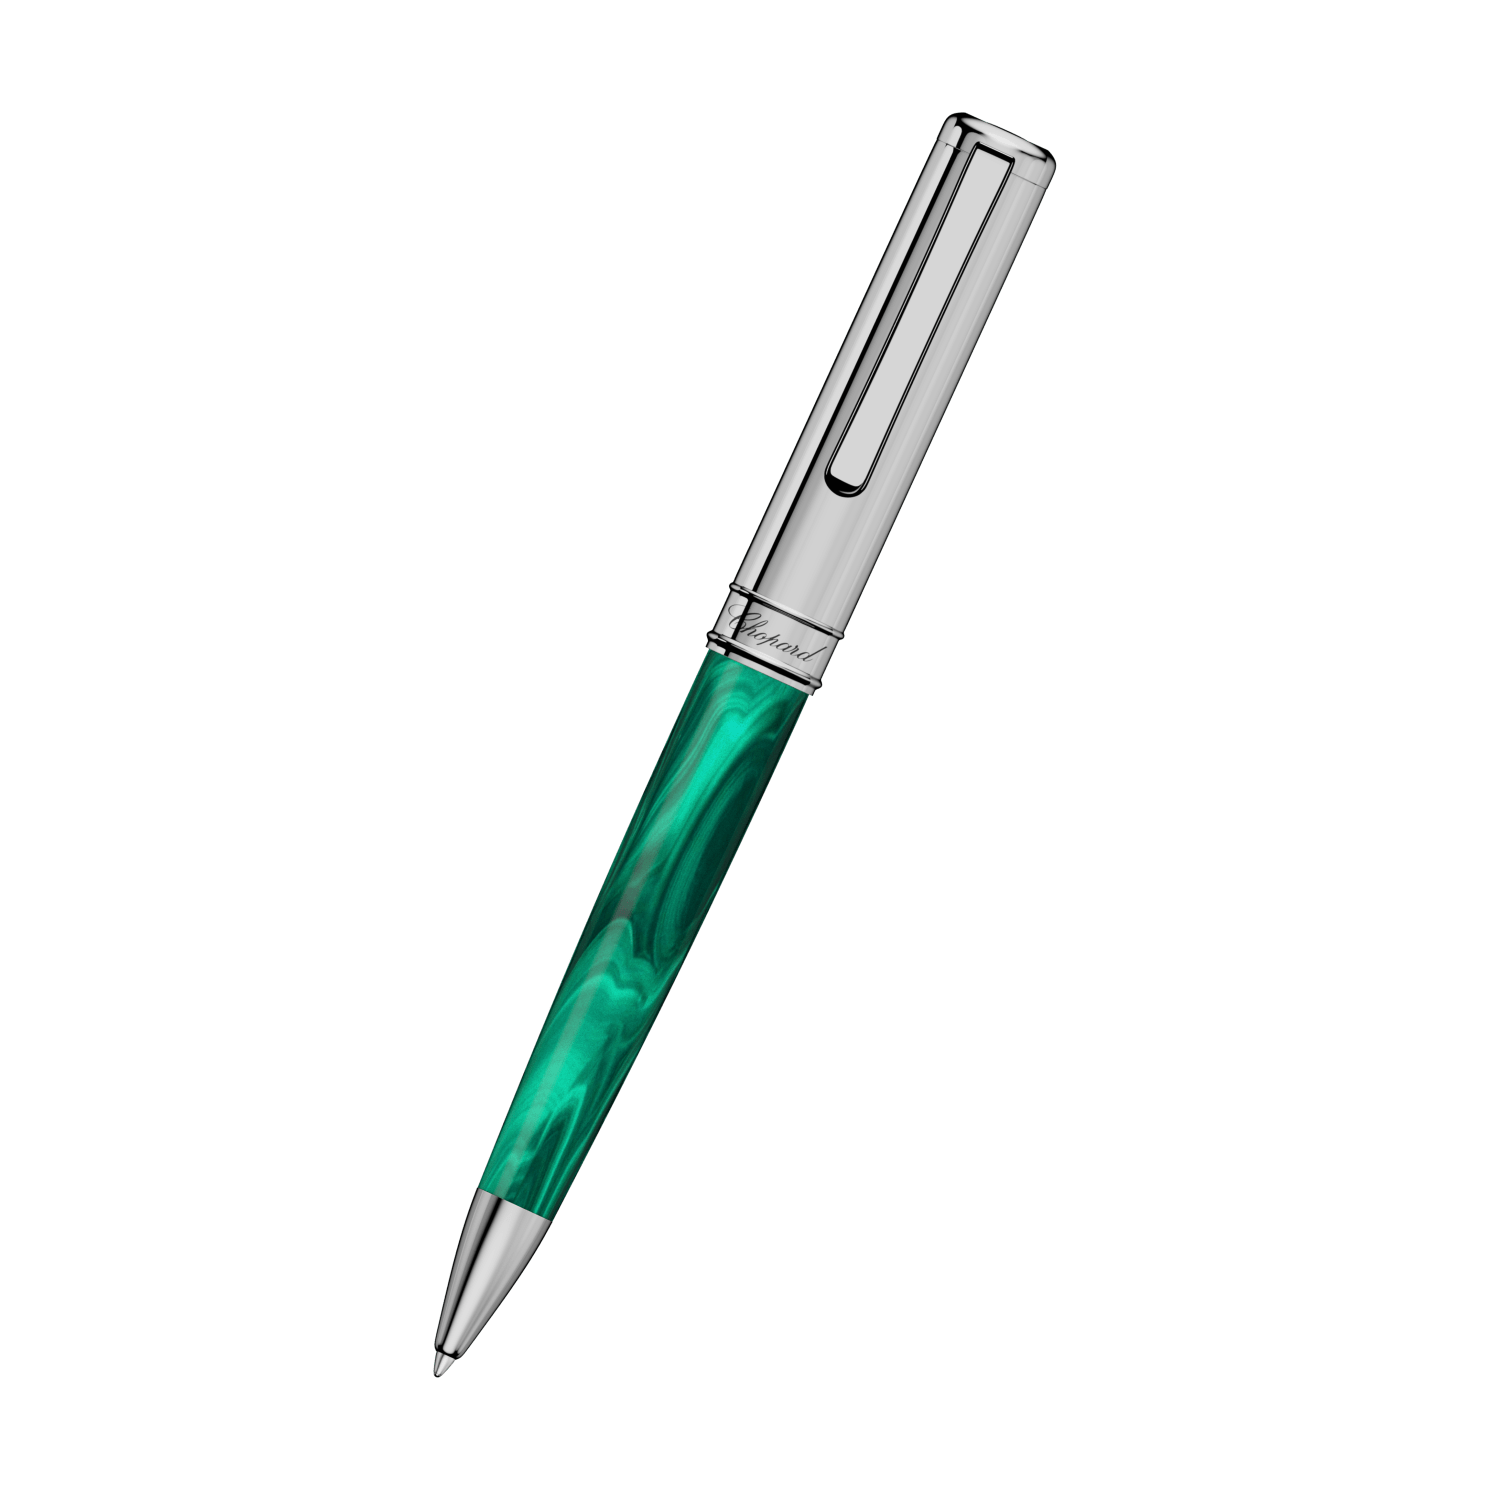 Classic ballpoint pen